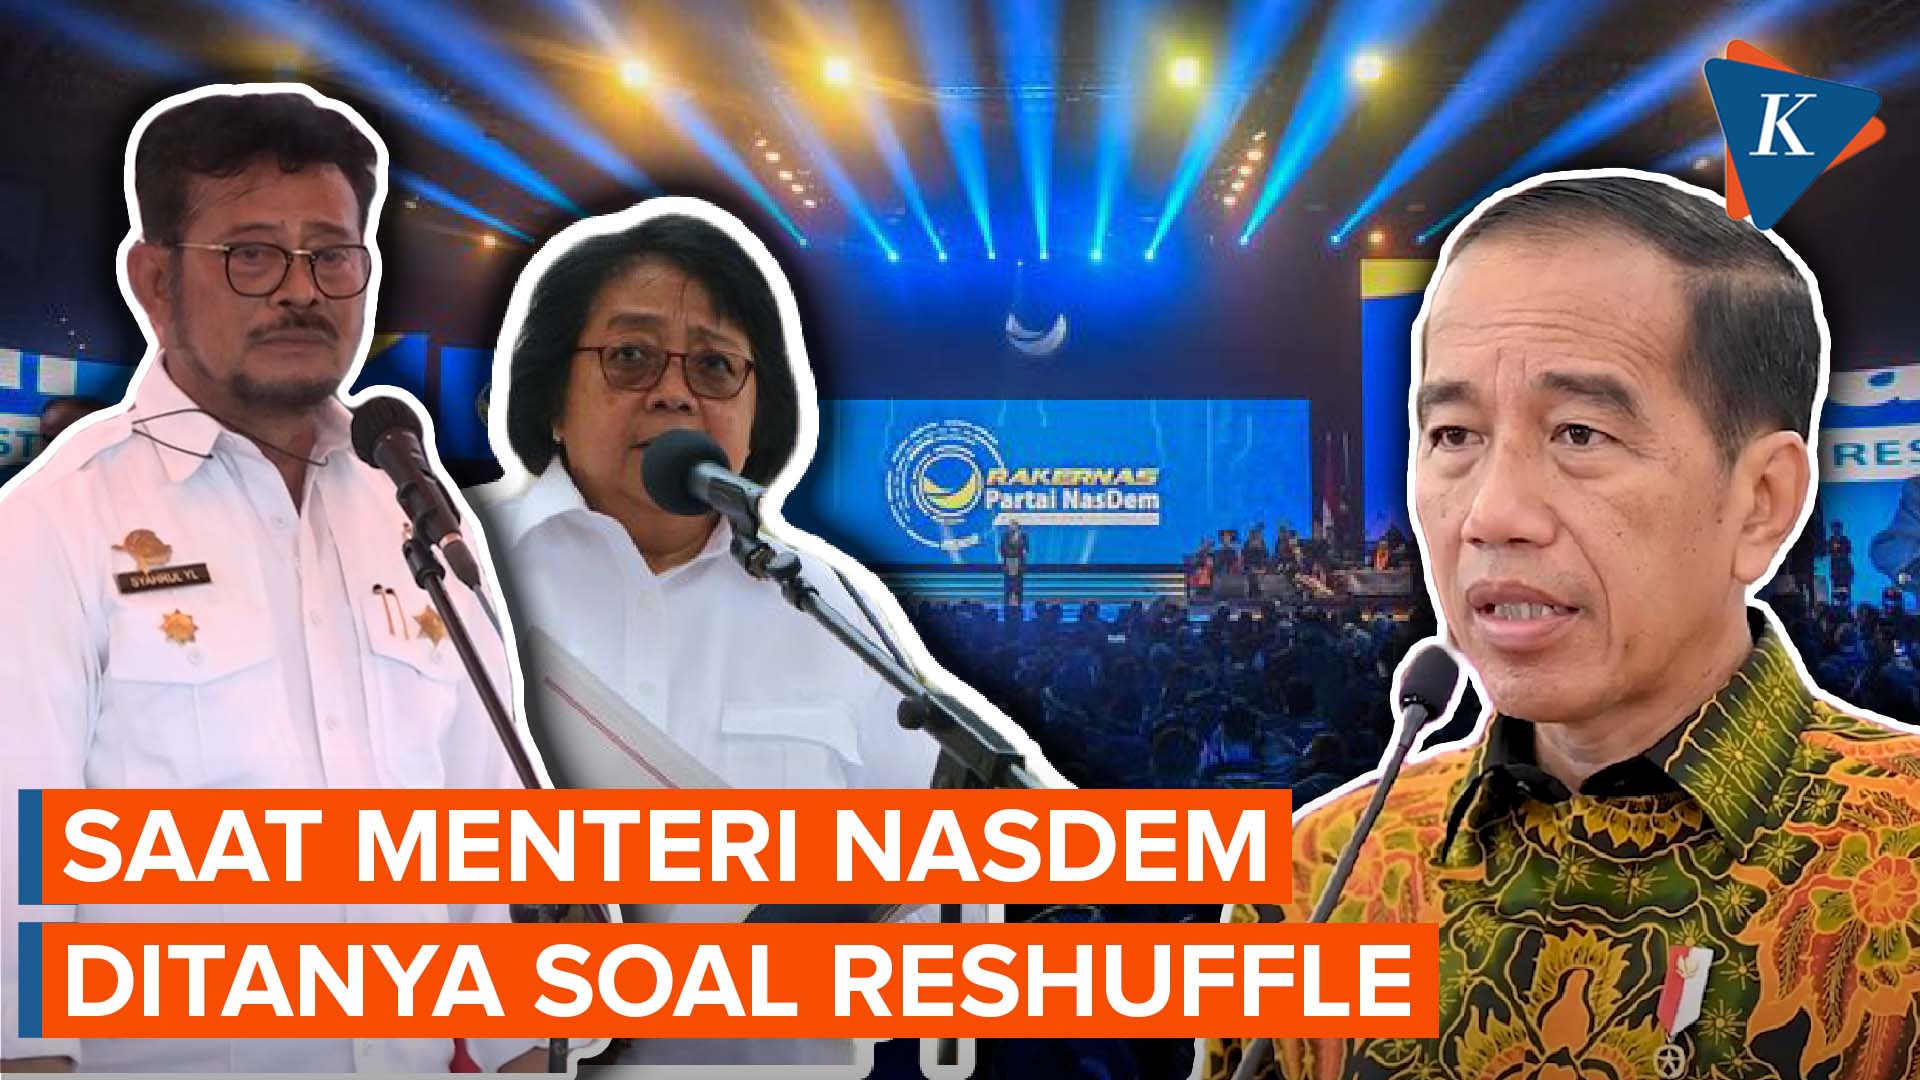 Menteri Nasdem Ditanya soal Reshuffle, SYL Ngaku Fokus Kerja, Siti Nurbaya Bilang Ngaco